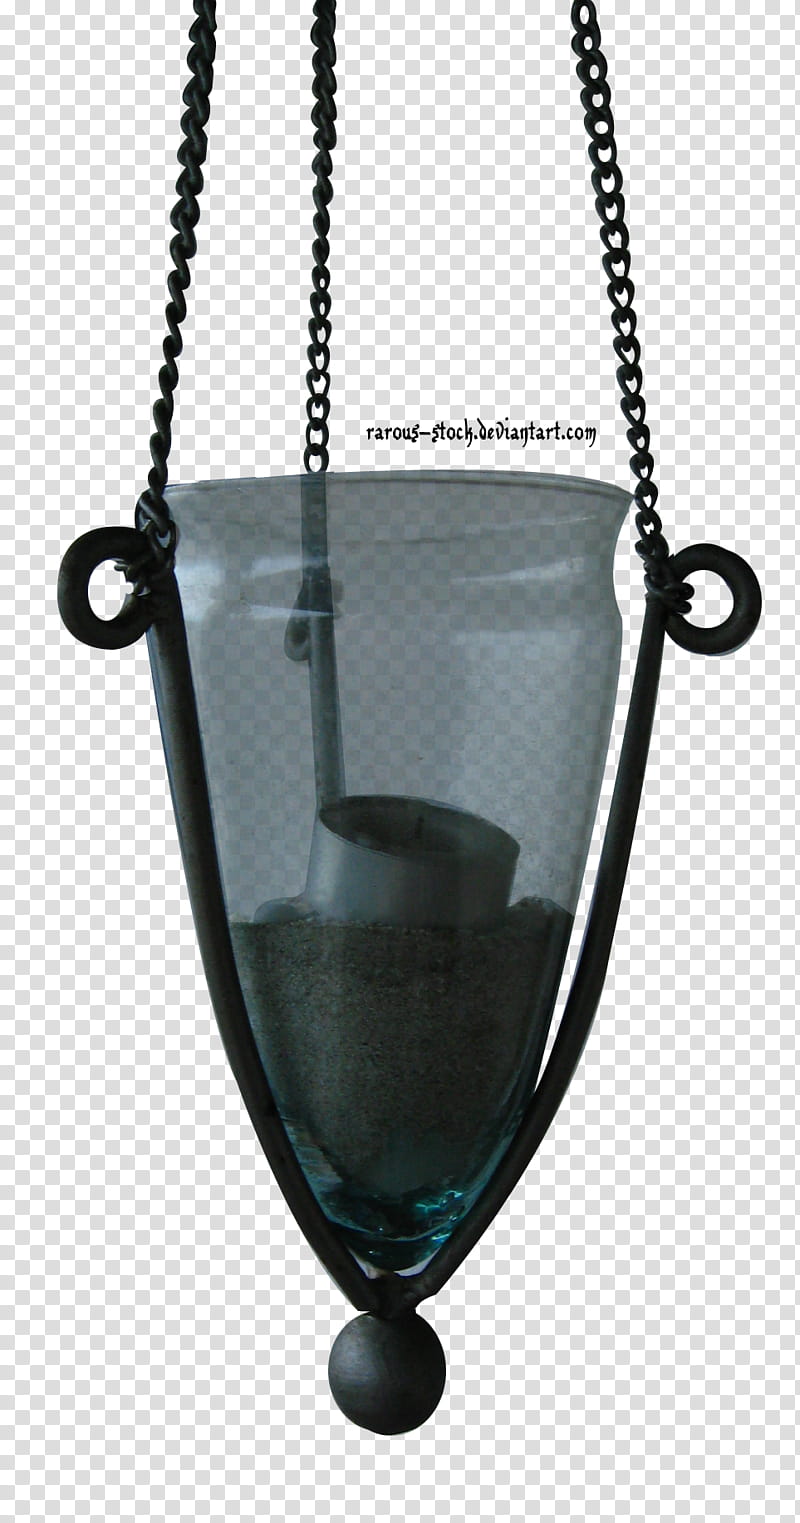 Hanging Candle Holder, unlighted black pendant lamp transparent background PNG clipart